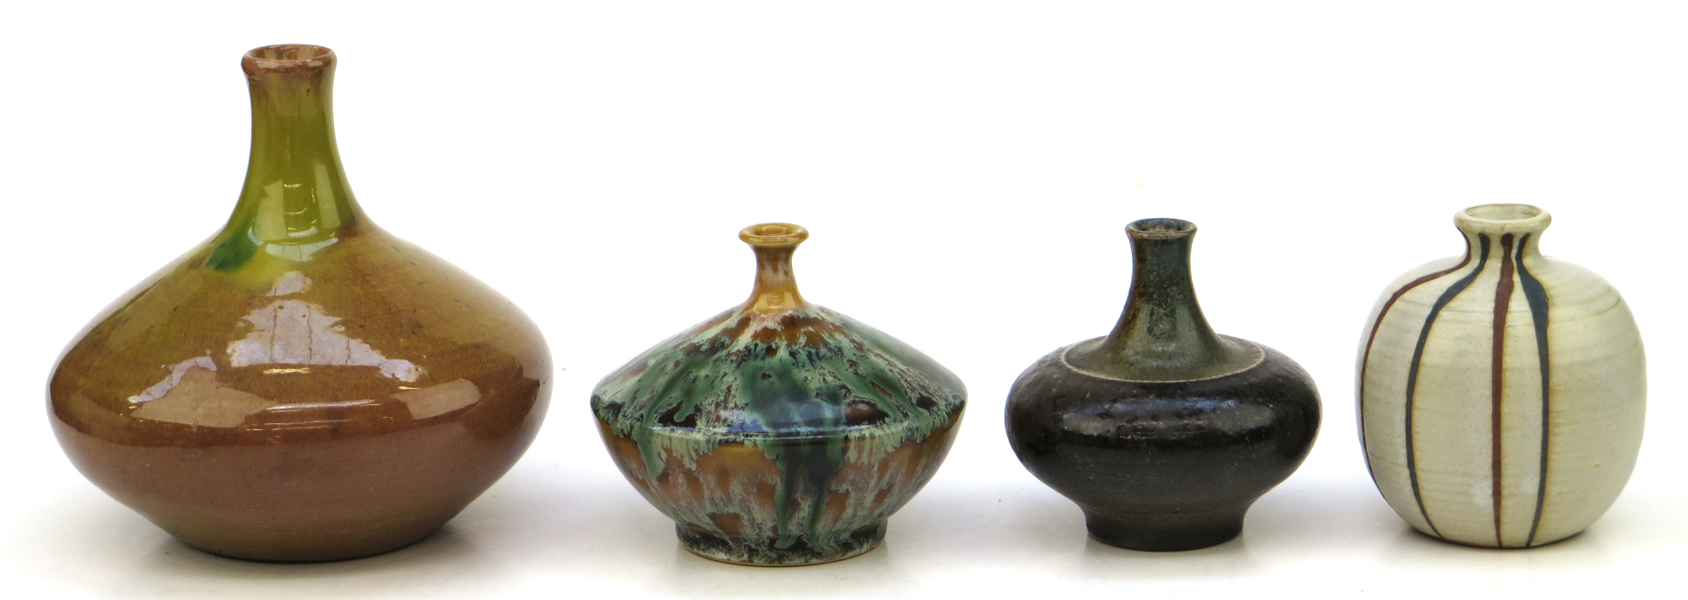 4  delar modern keramik, bland annat Wallåkra_28706a_8db5c3bbfb758b6_lg.jpeg